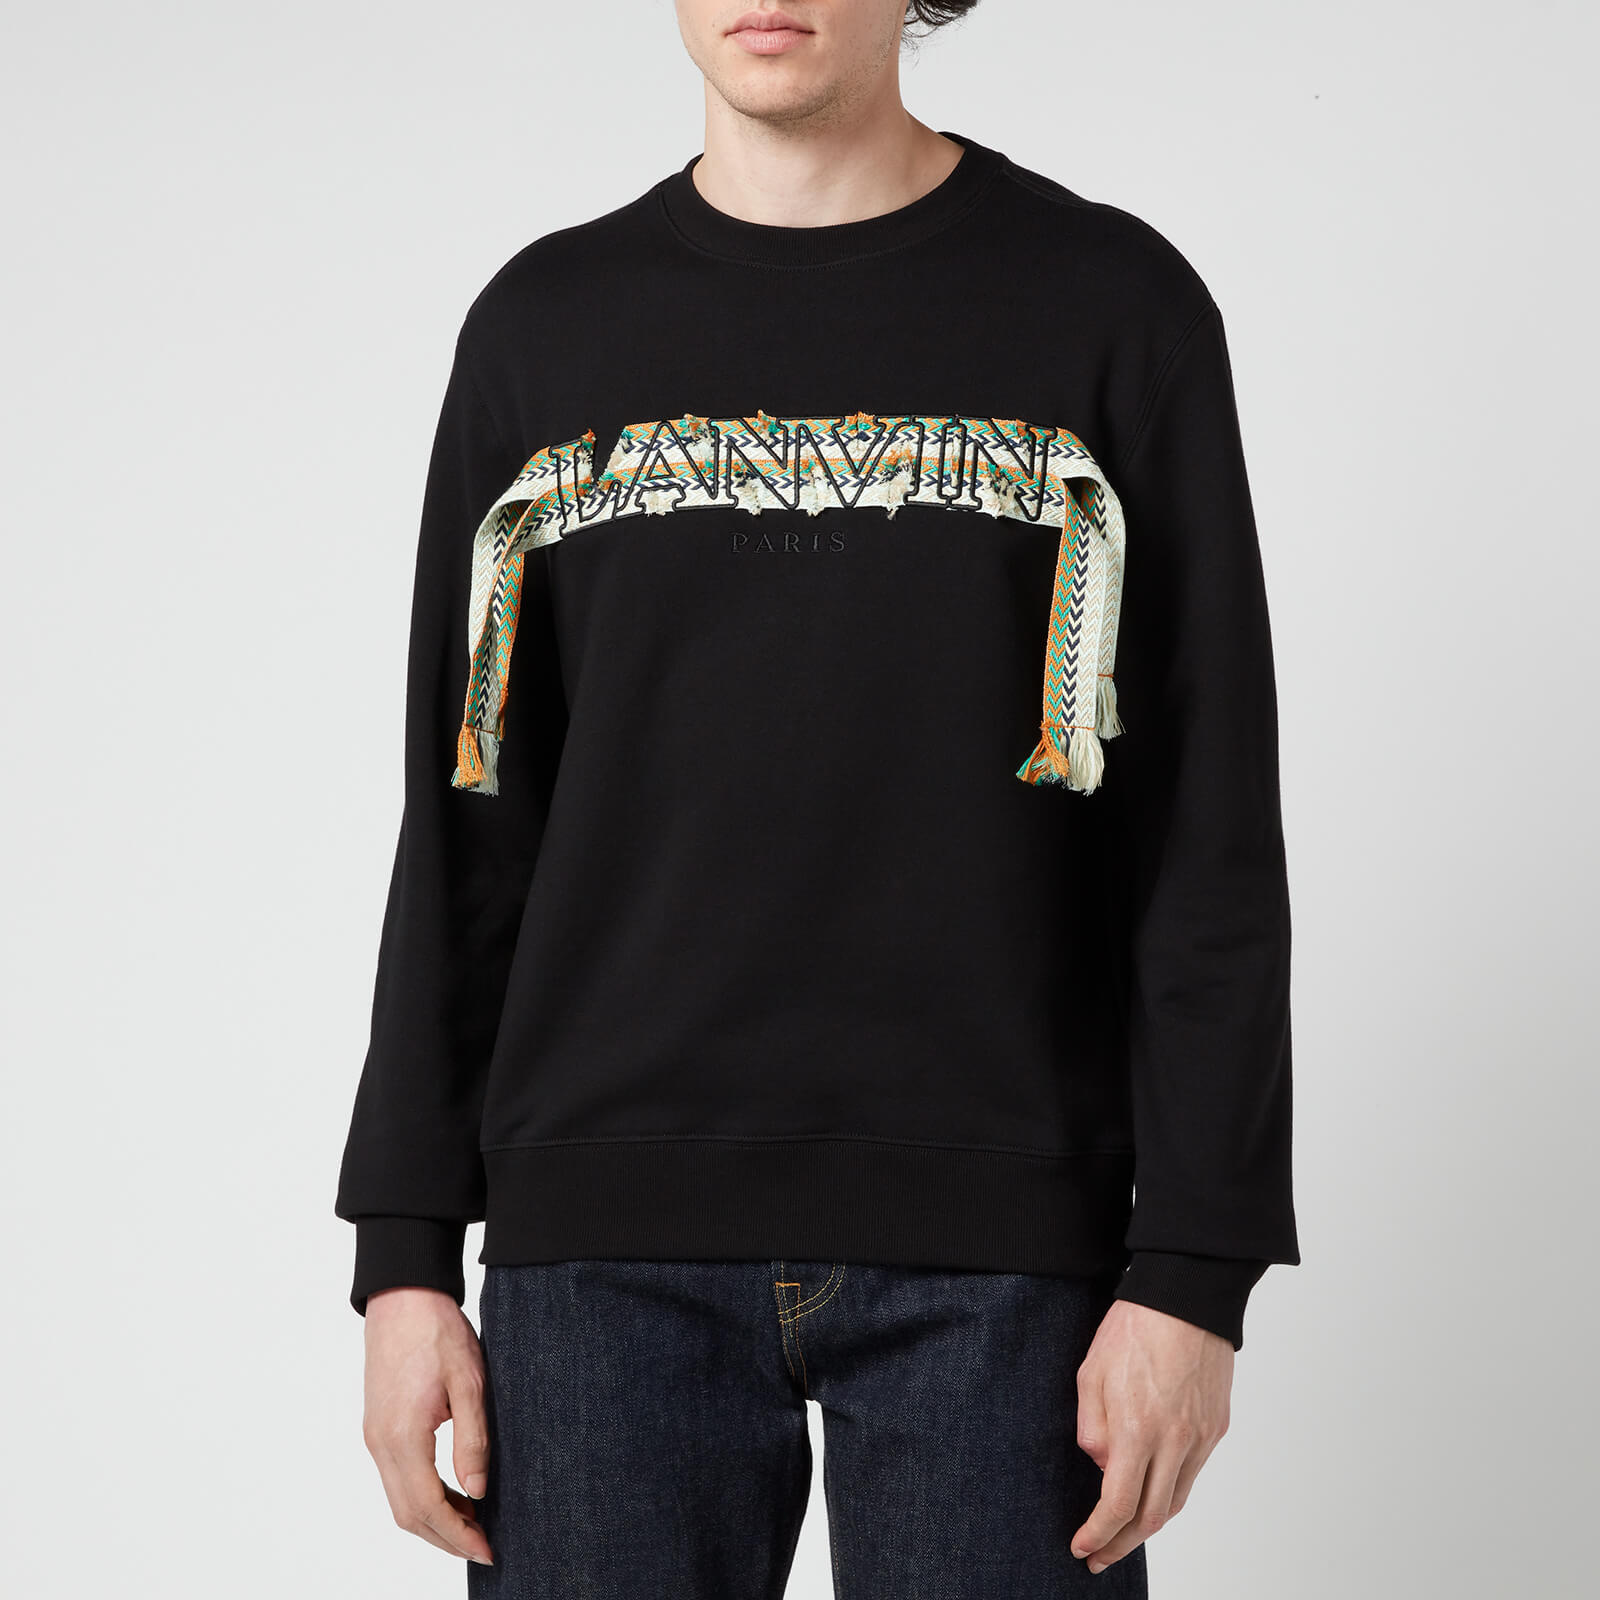 Lanvin Men's Embroidered Curb Sweatshirt - Black - S